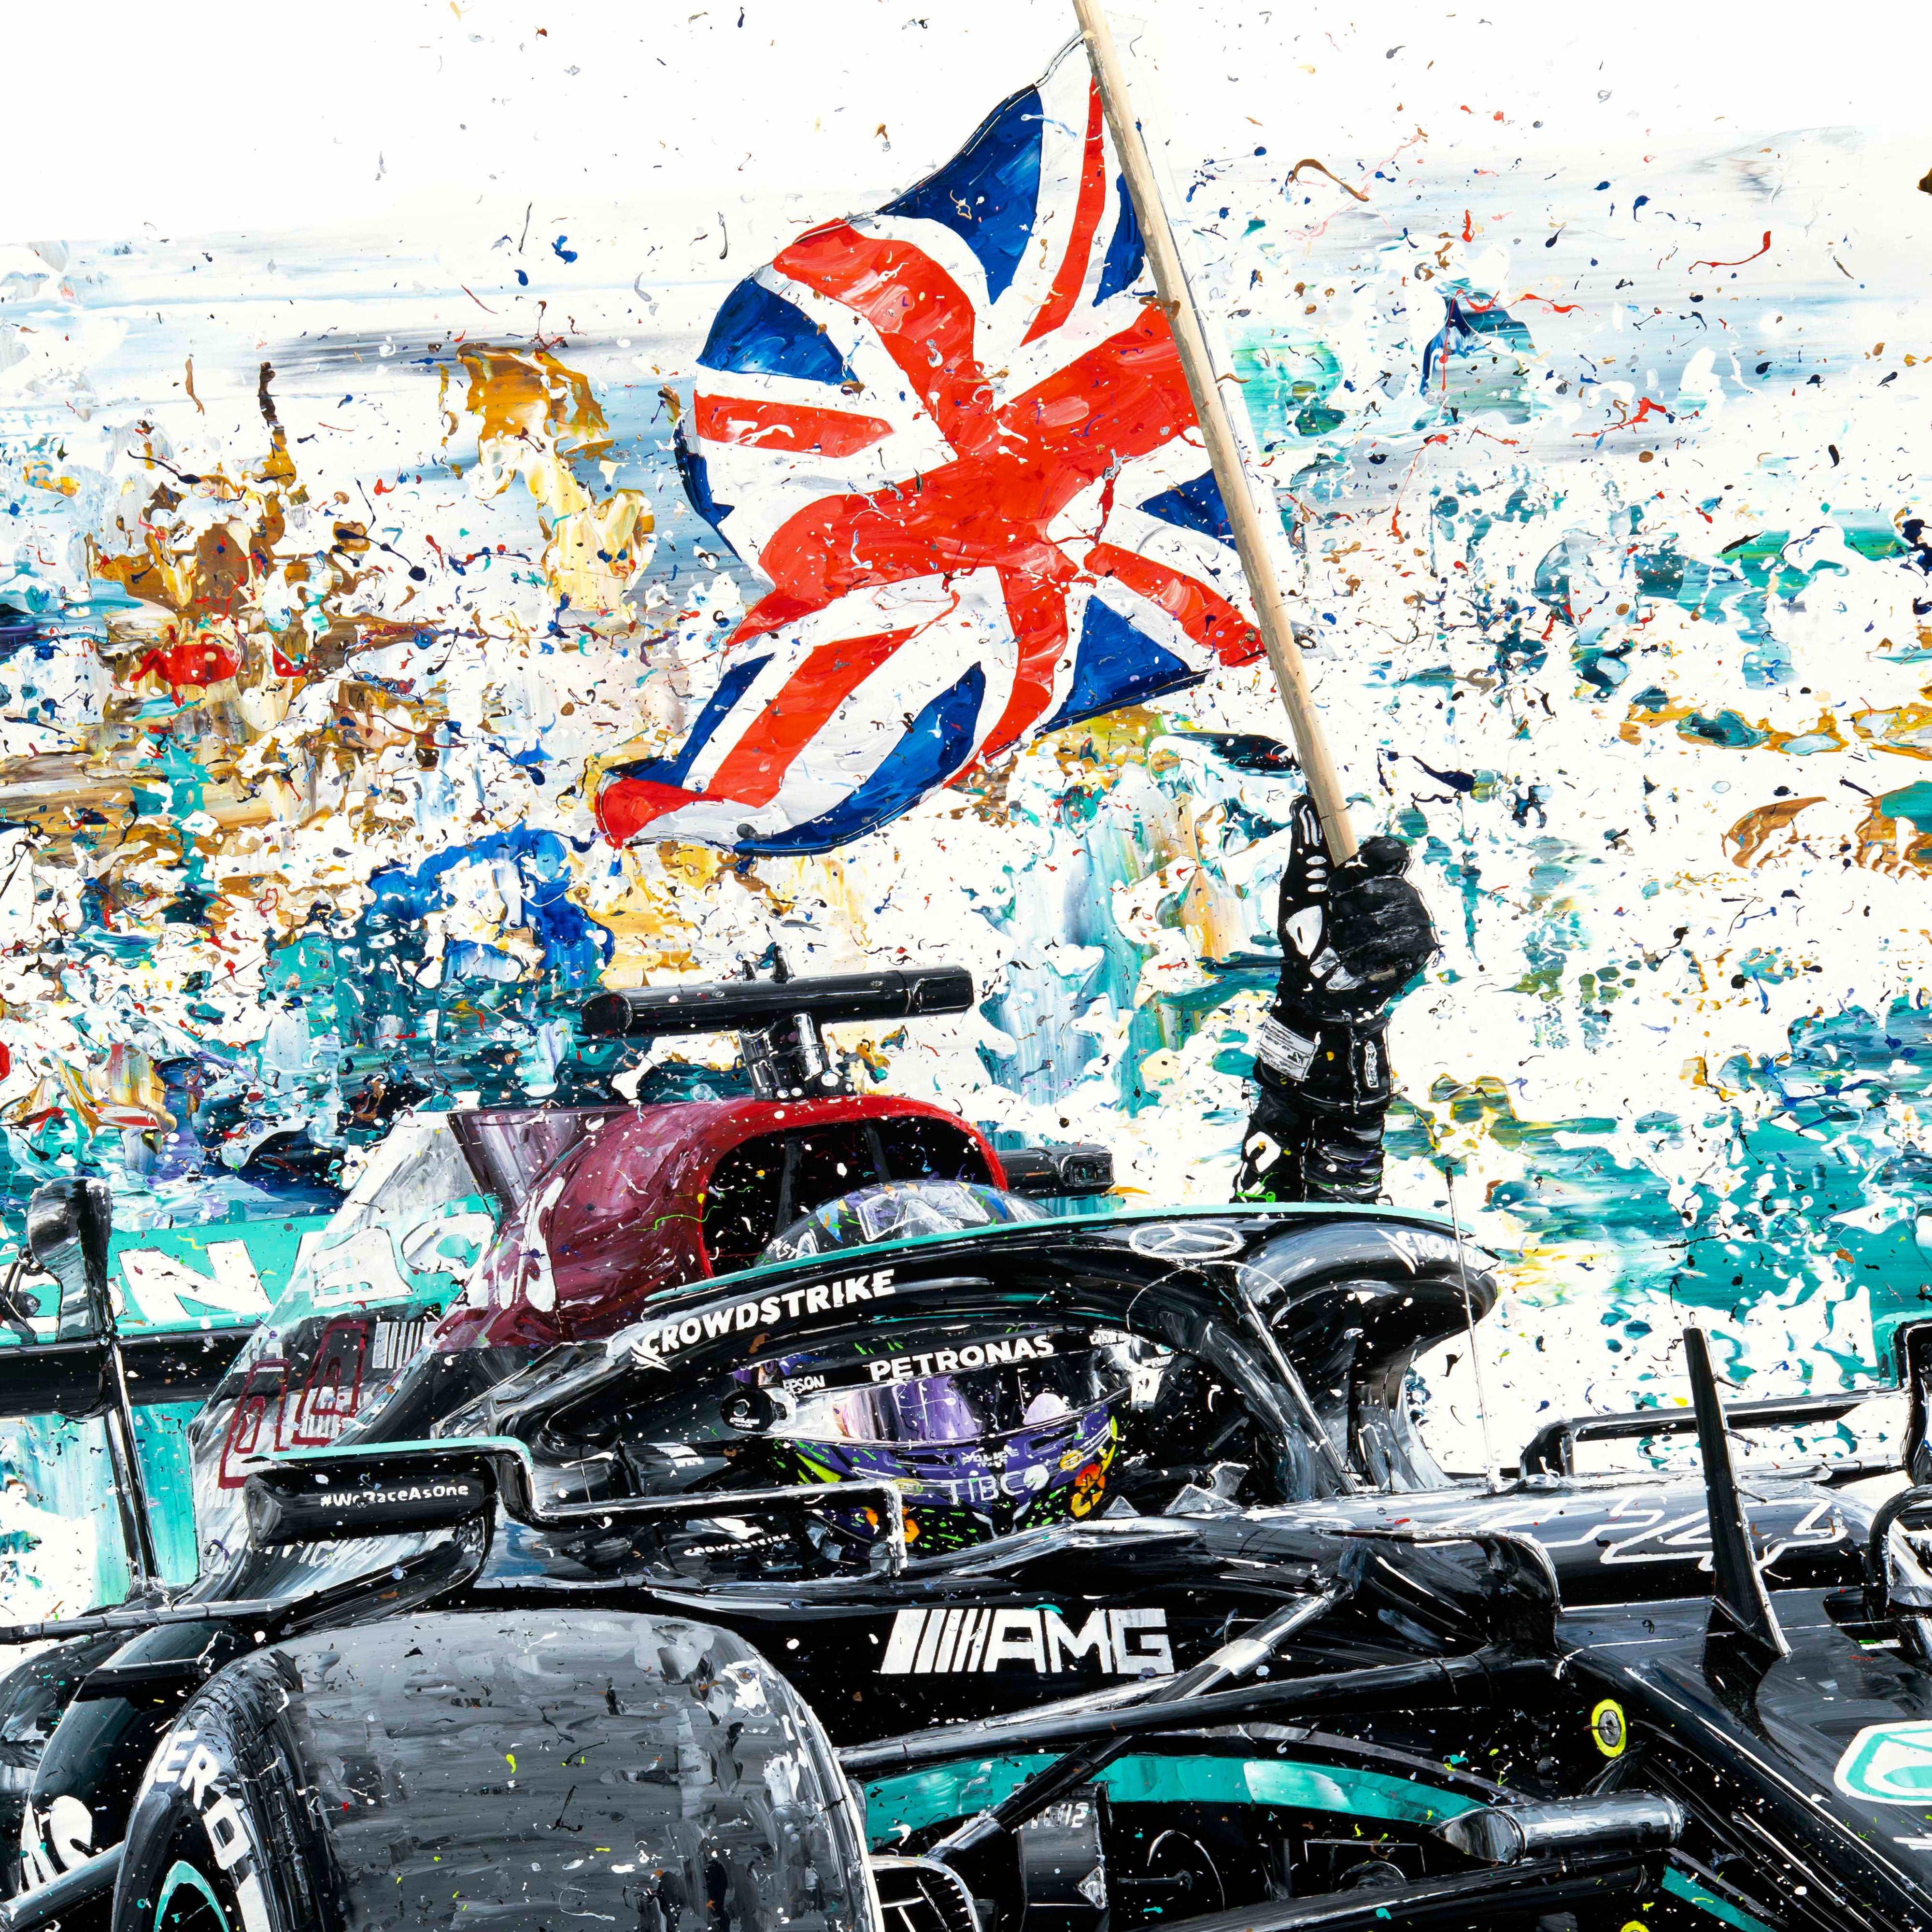 Lewis Hamilton 2021 'Union Jack' Giclee Print – David Johnson